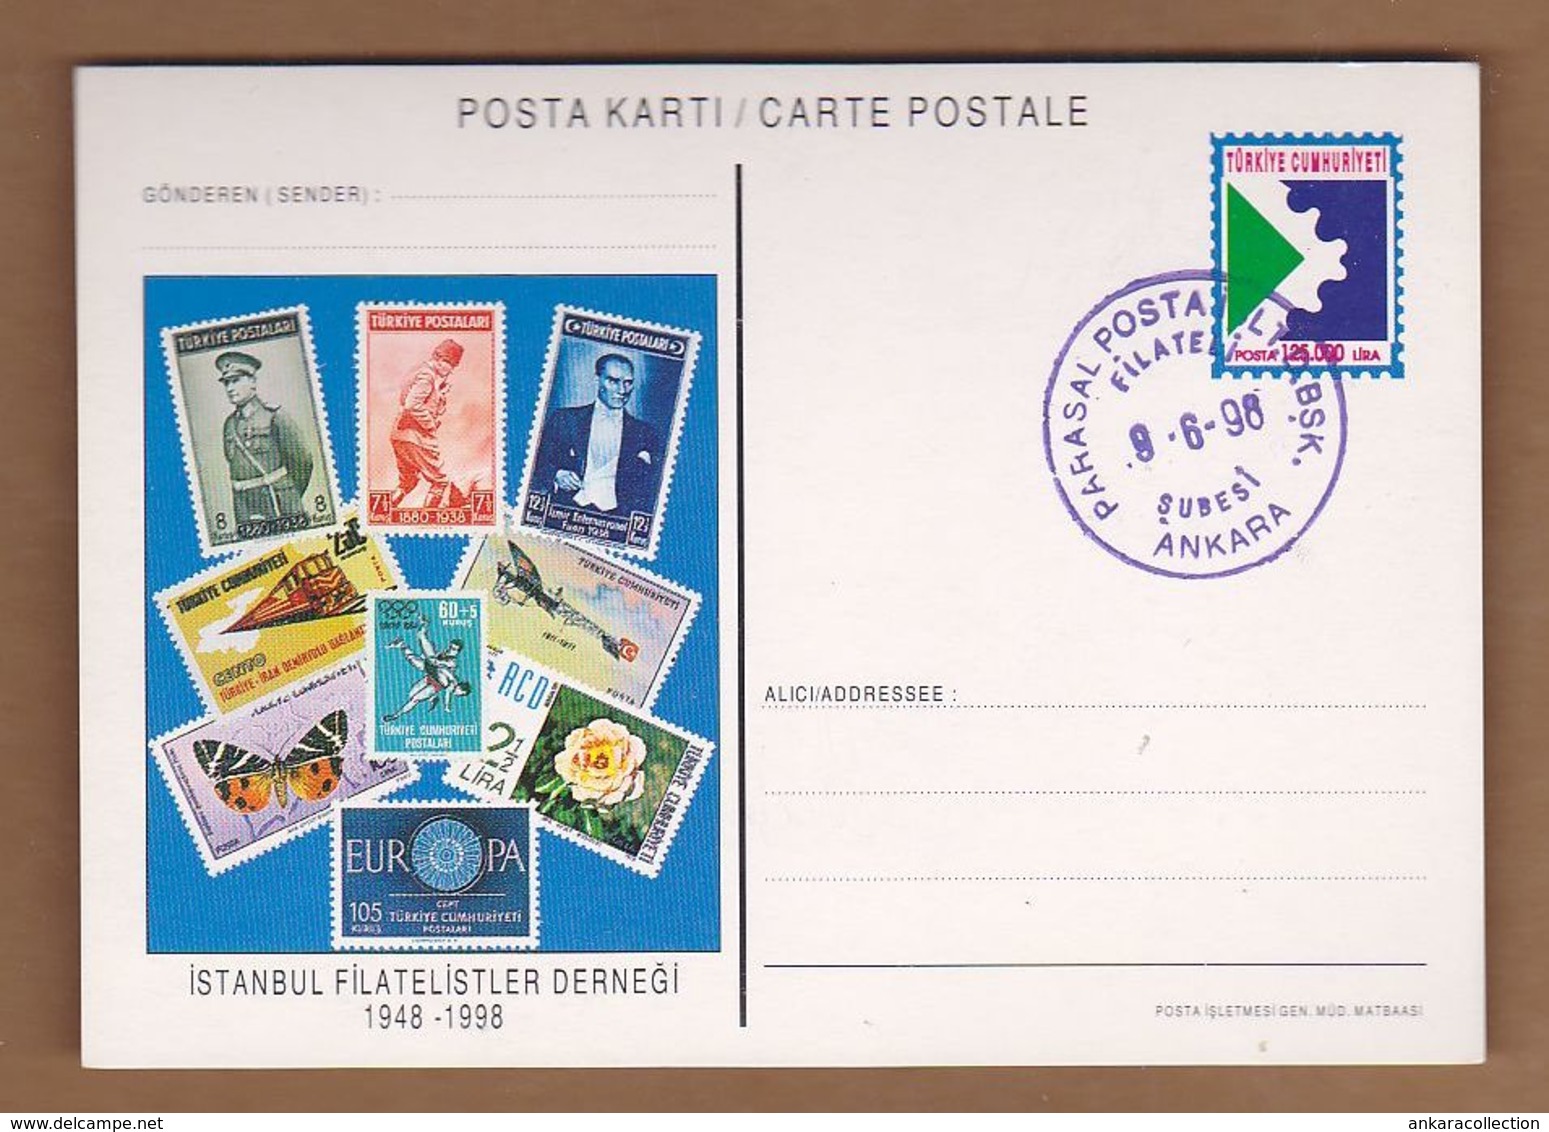 AC - TURKEY POSTAL STATIONARY - MONETARY MAIL ADMINISTRATION DEPARTMENT ANKARA, 09 JUNE 1998 - Postal Stationery